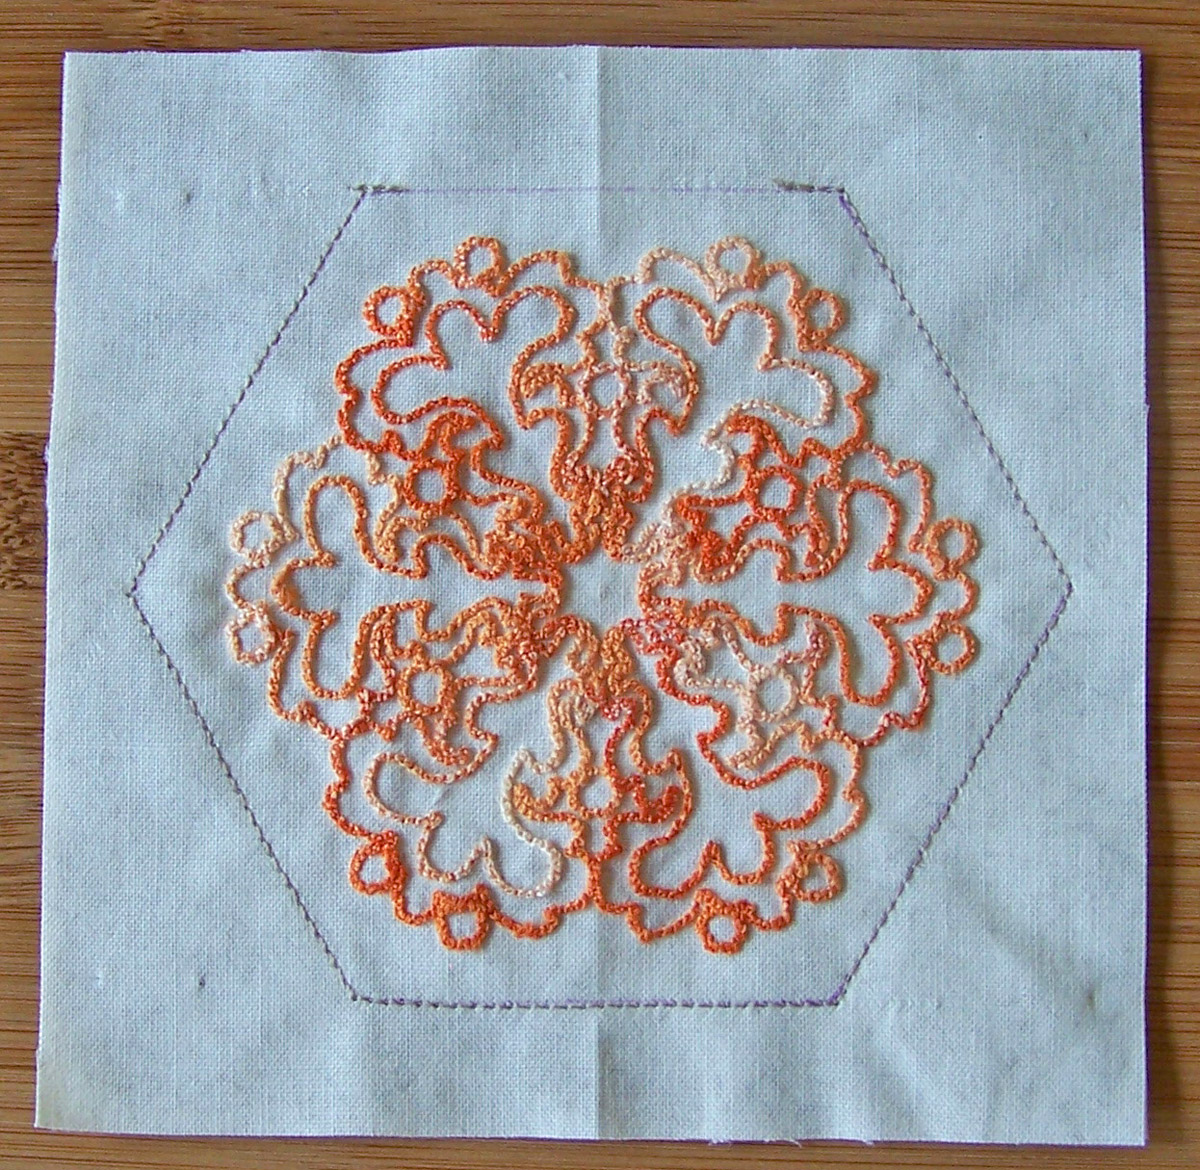 Embroidered Orange Delight Pincushion Tutorial